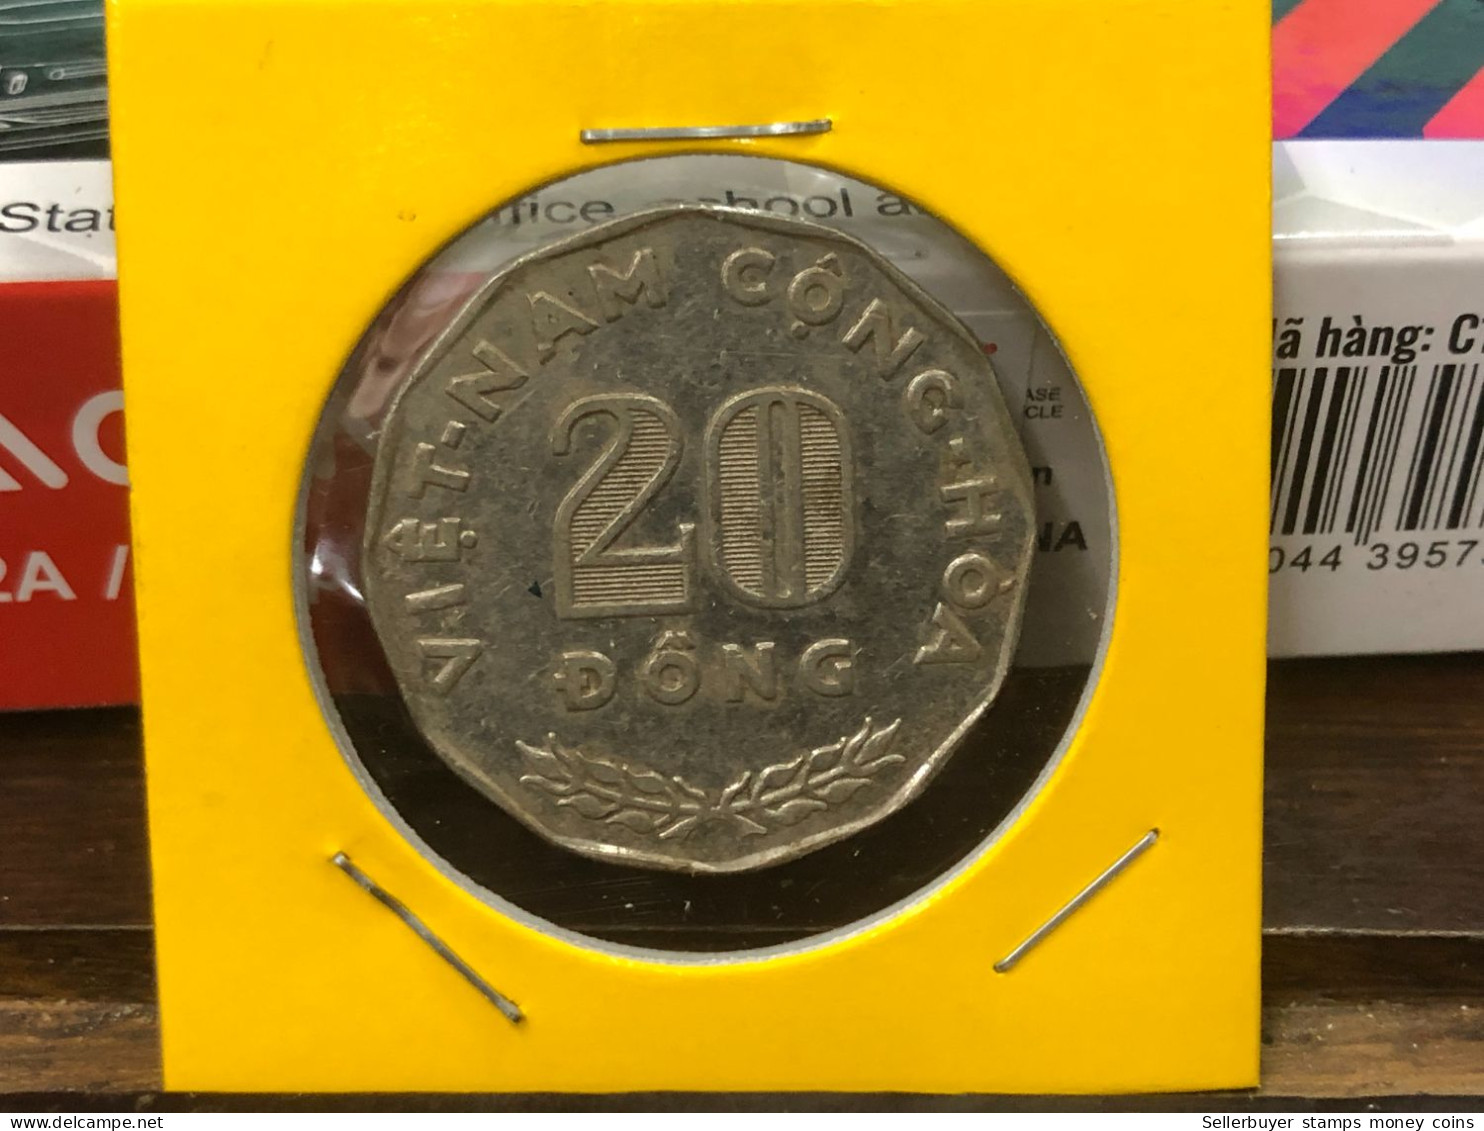 SOUTH VIET-NAM COINS 20 DONG 1968 KM#10-NICKEL CLAD STEEL -1 Pcs- Aunc No 2 - Vietnam